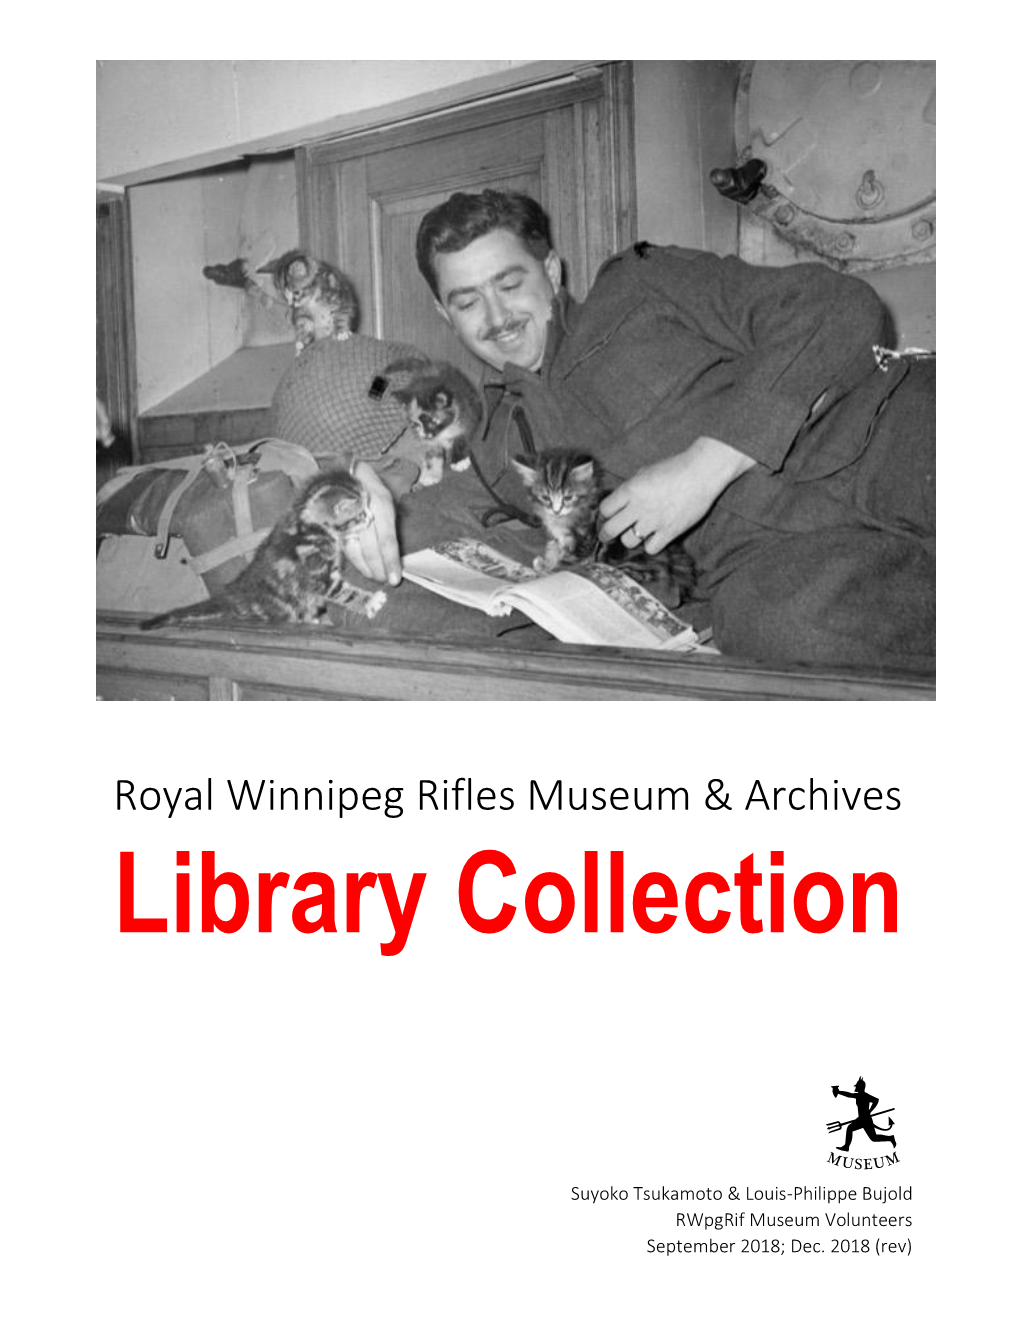 Royal Winnipeg Rifles Museum & Archives